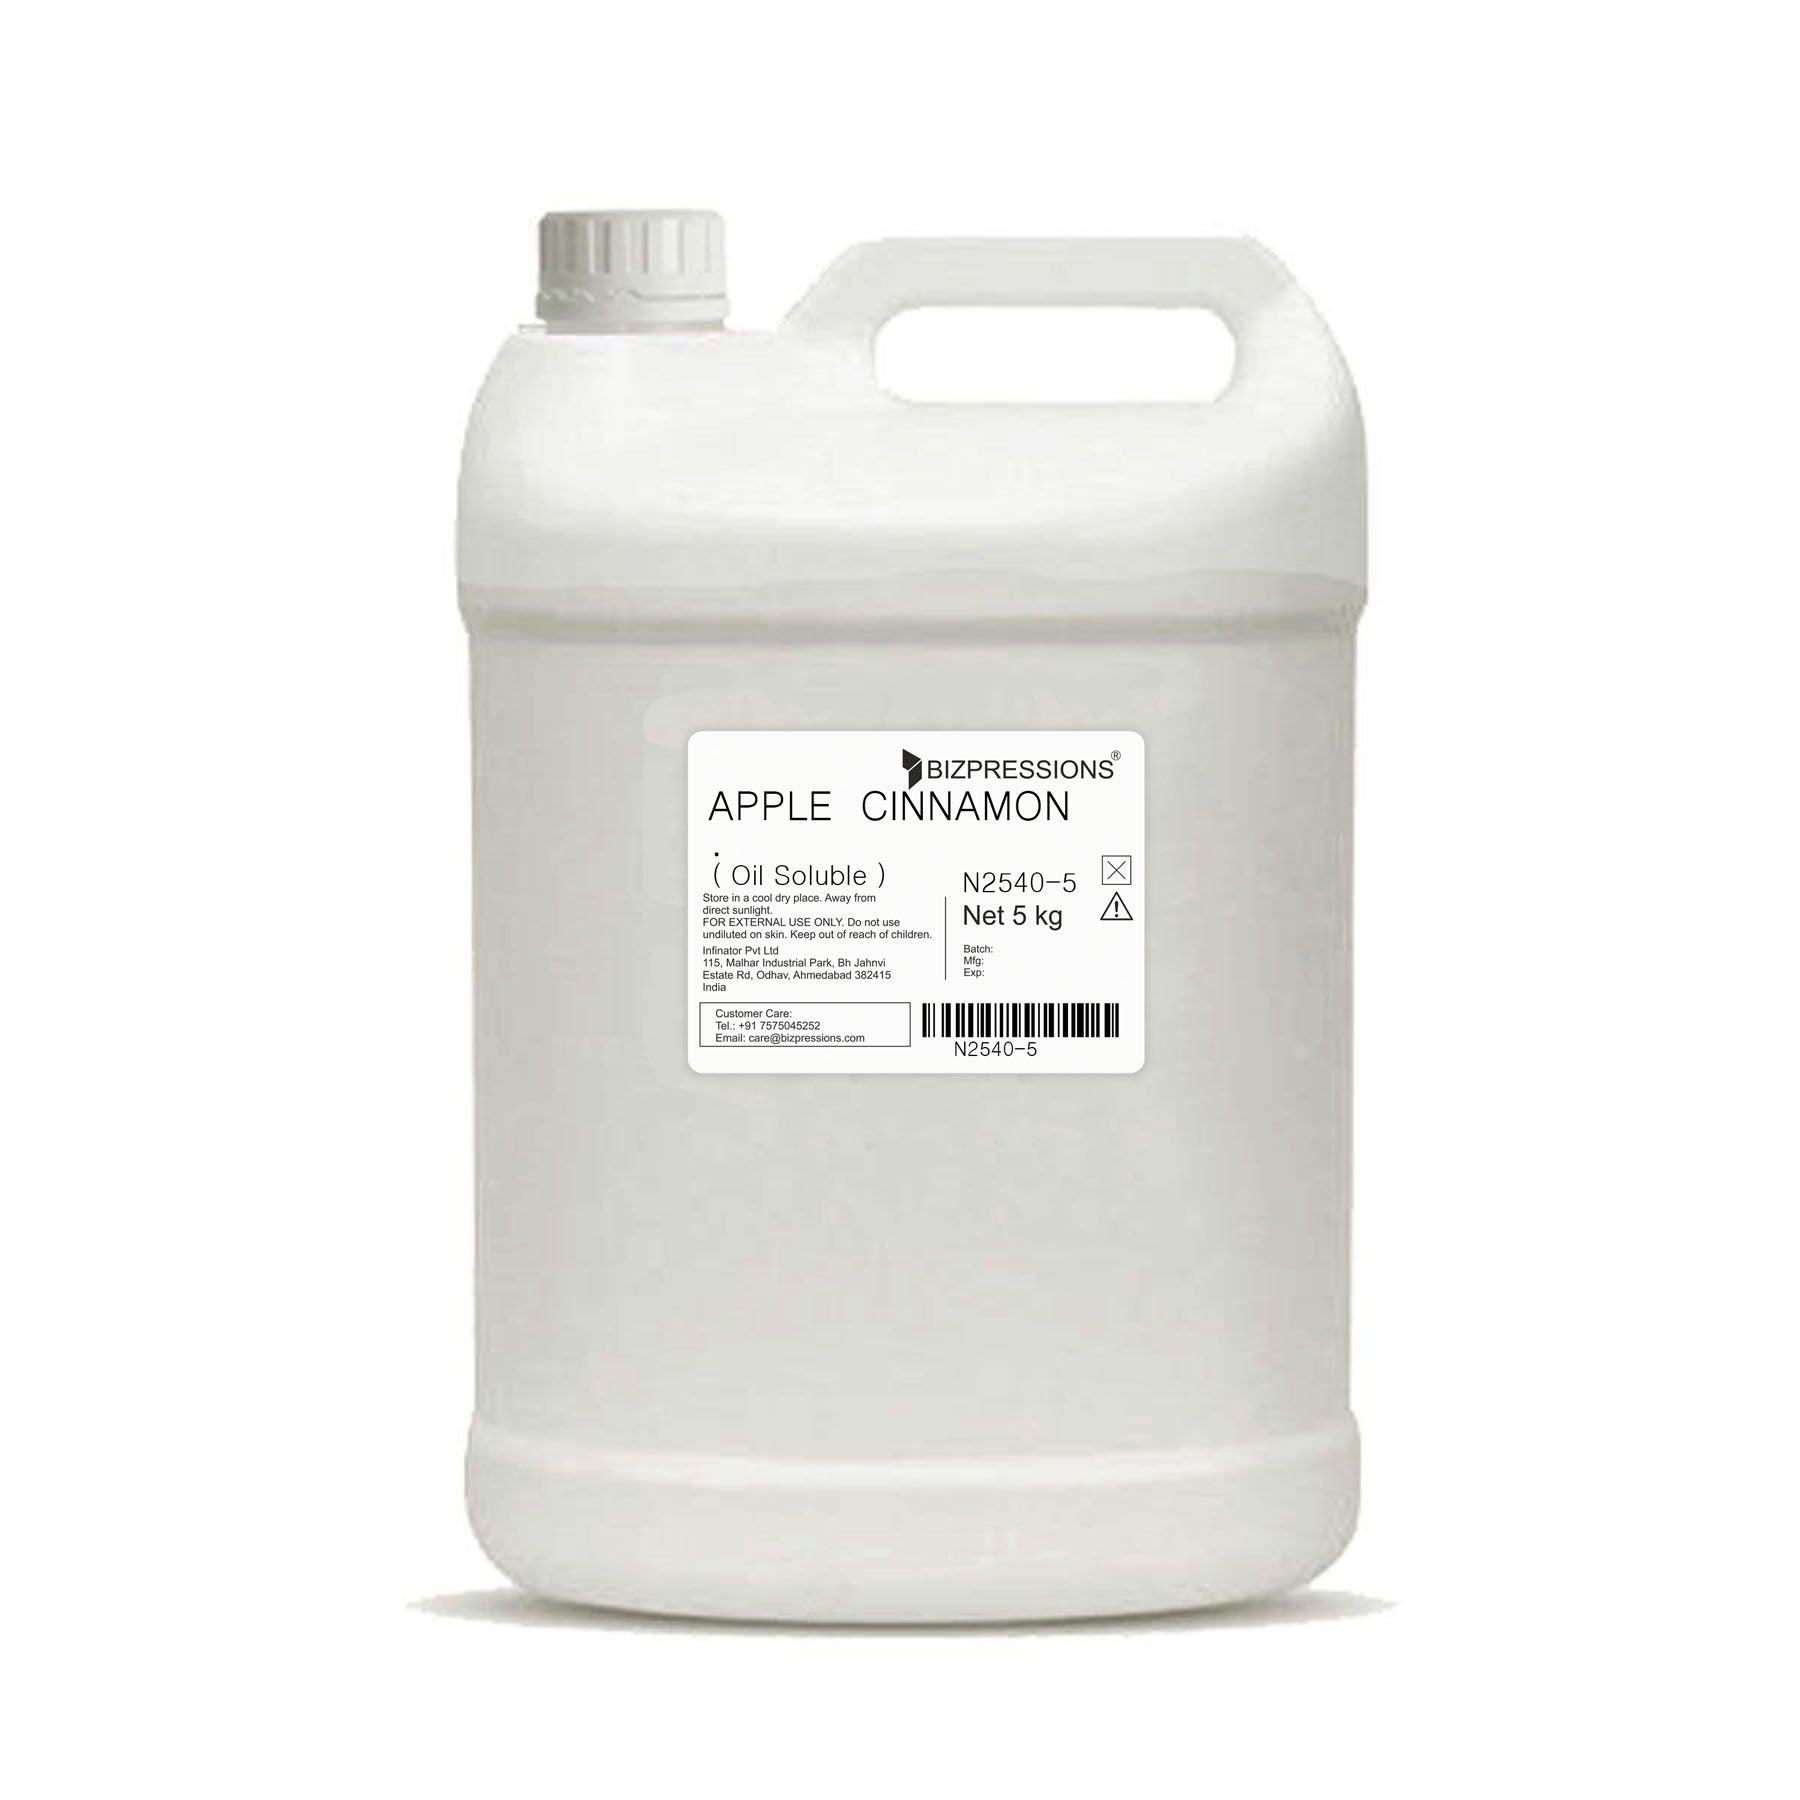 APPLE CINNAMON - Fragrance ( Oil Soluble ) - 5 kg